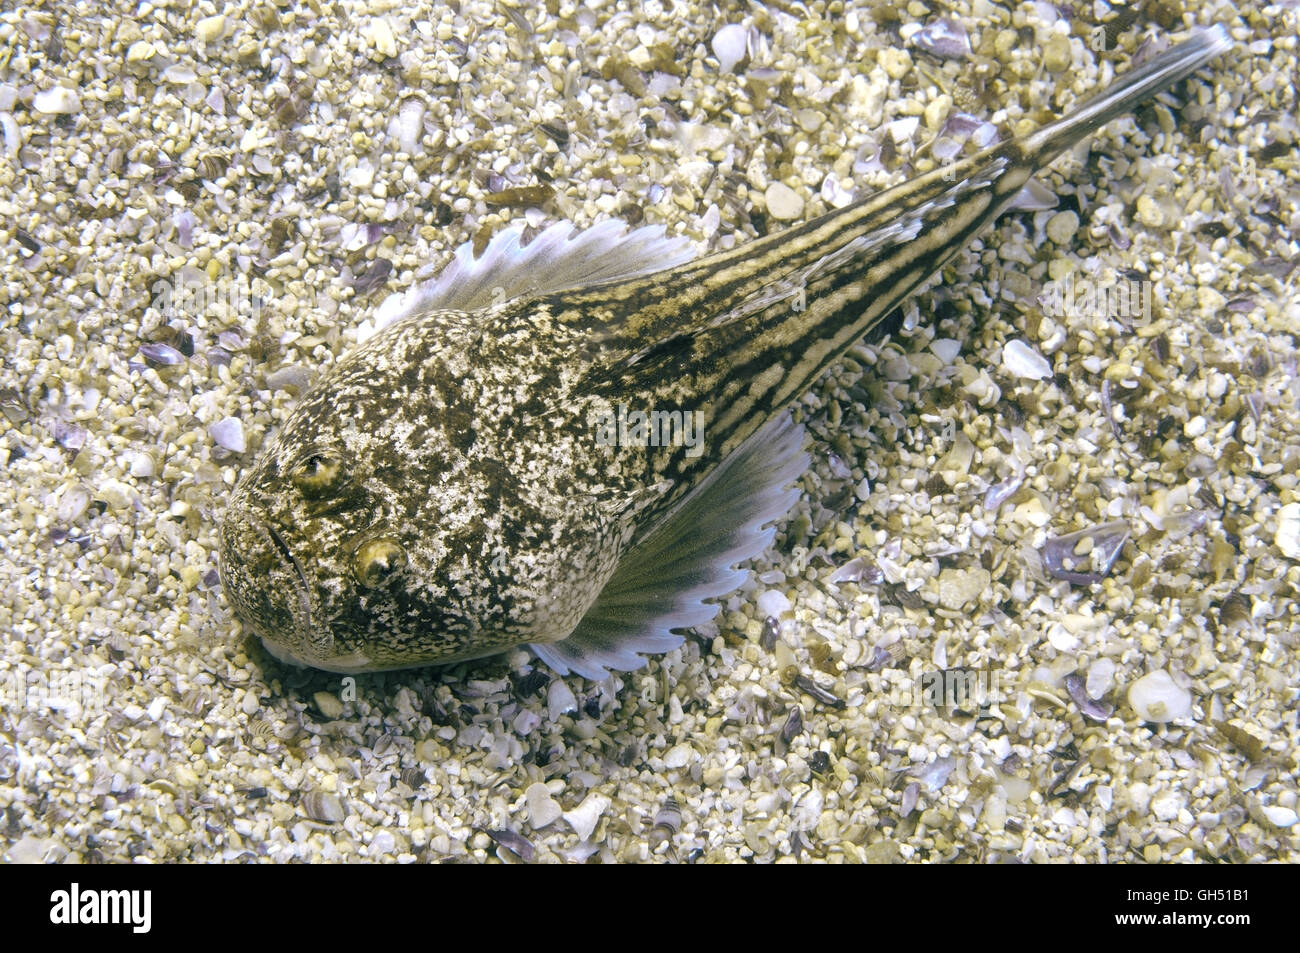 Atlantic stargazer (Uranoscopus scaber) lies on a sandy bottom, Black Sea Stock Photo